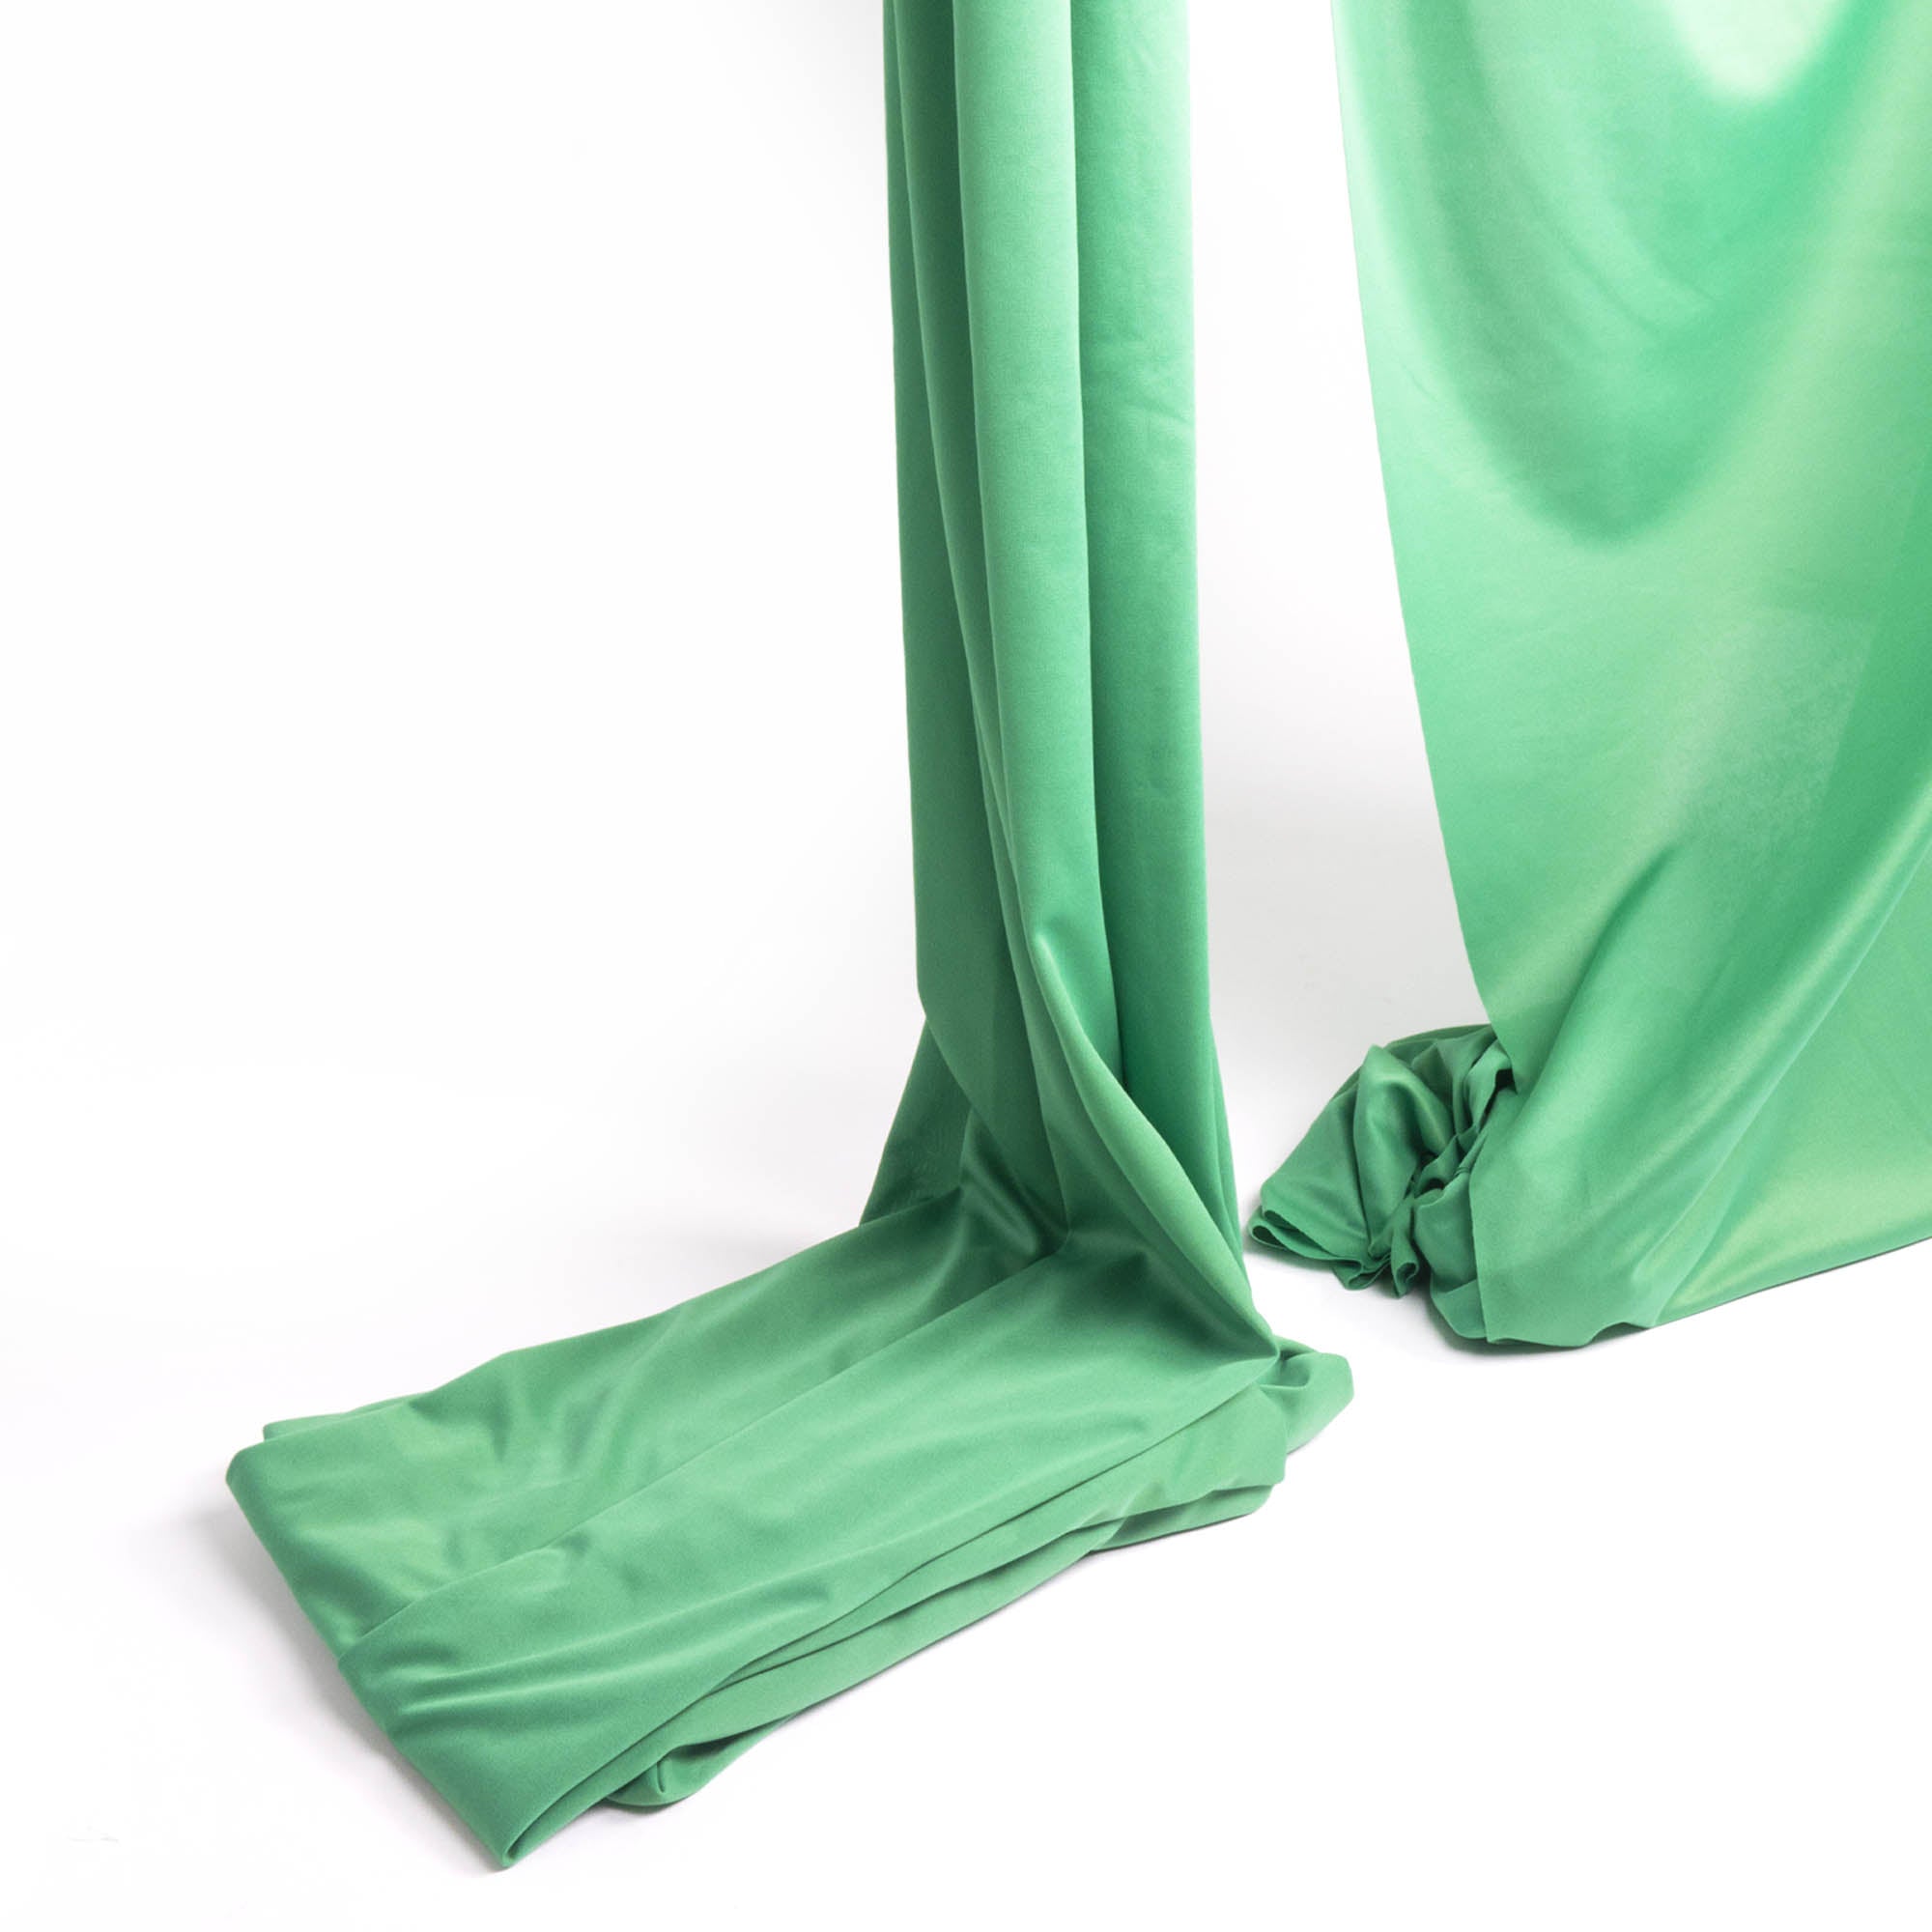 Firetoys youth aerial silk kelly green folded ends